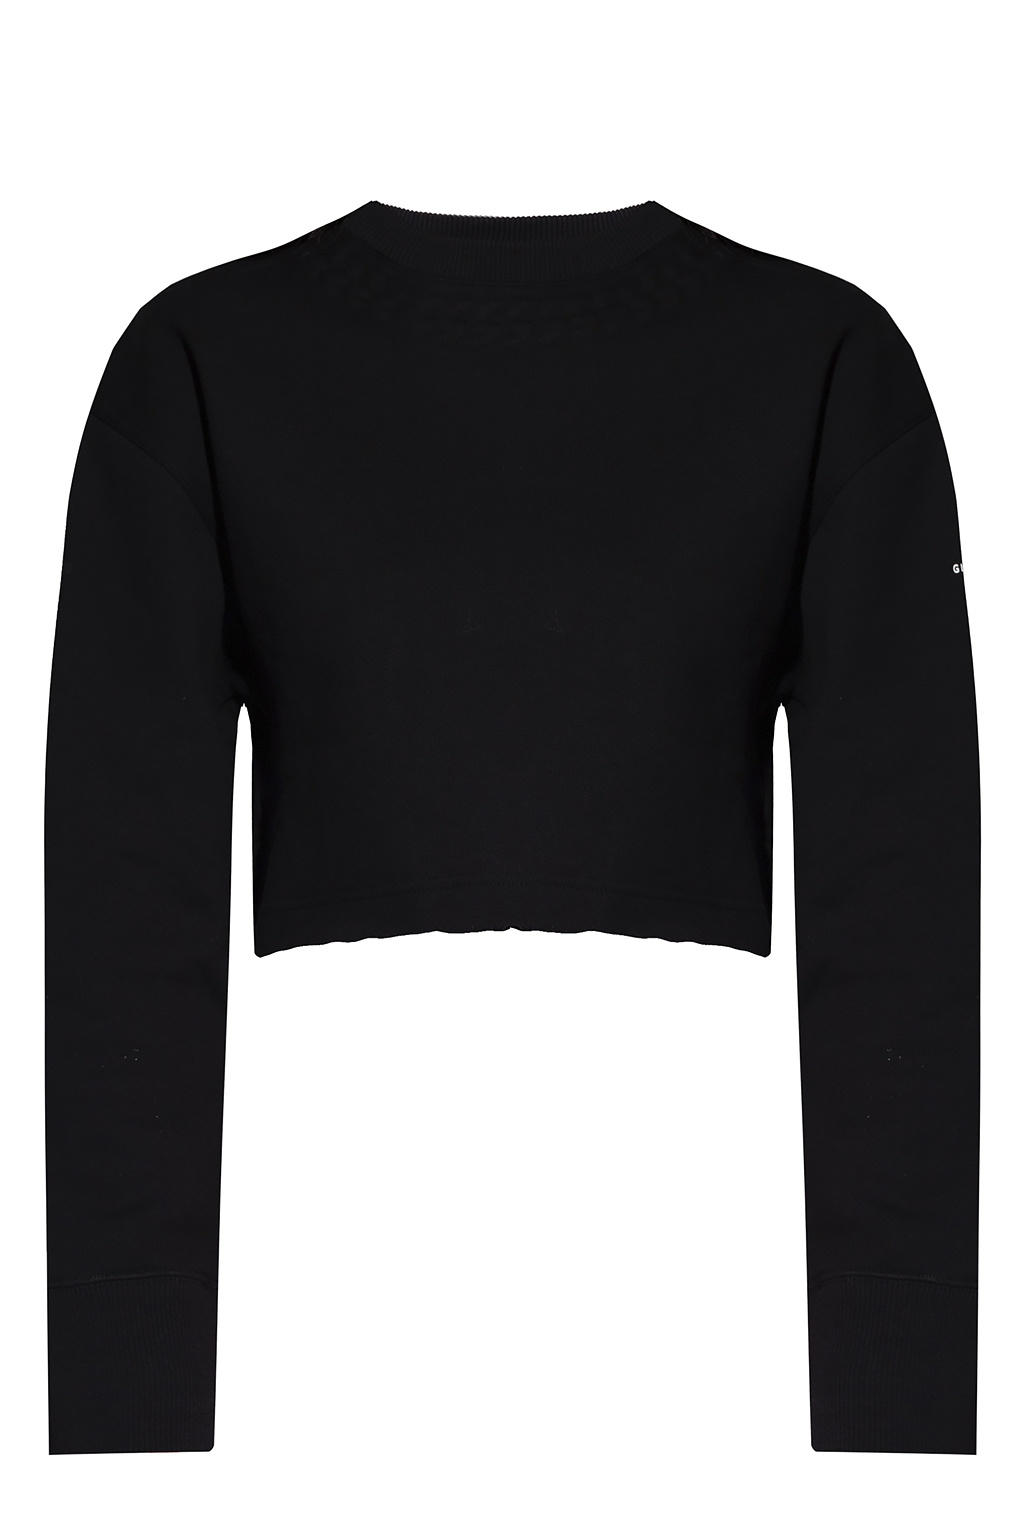 Givenchy Raw-edge sweatshirt